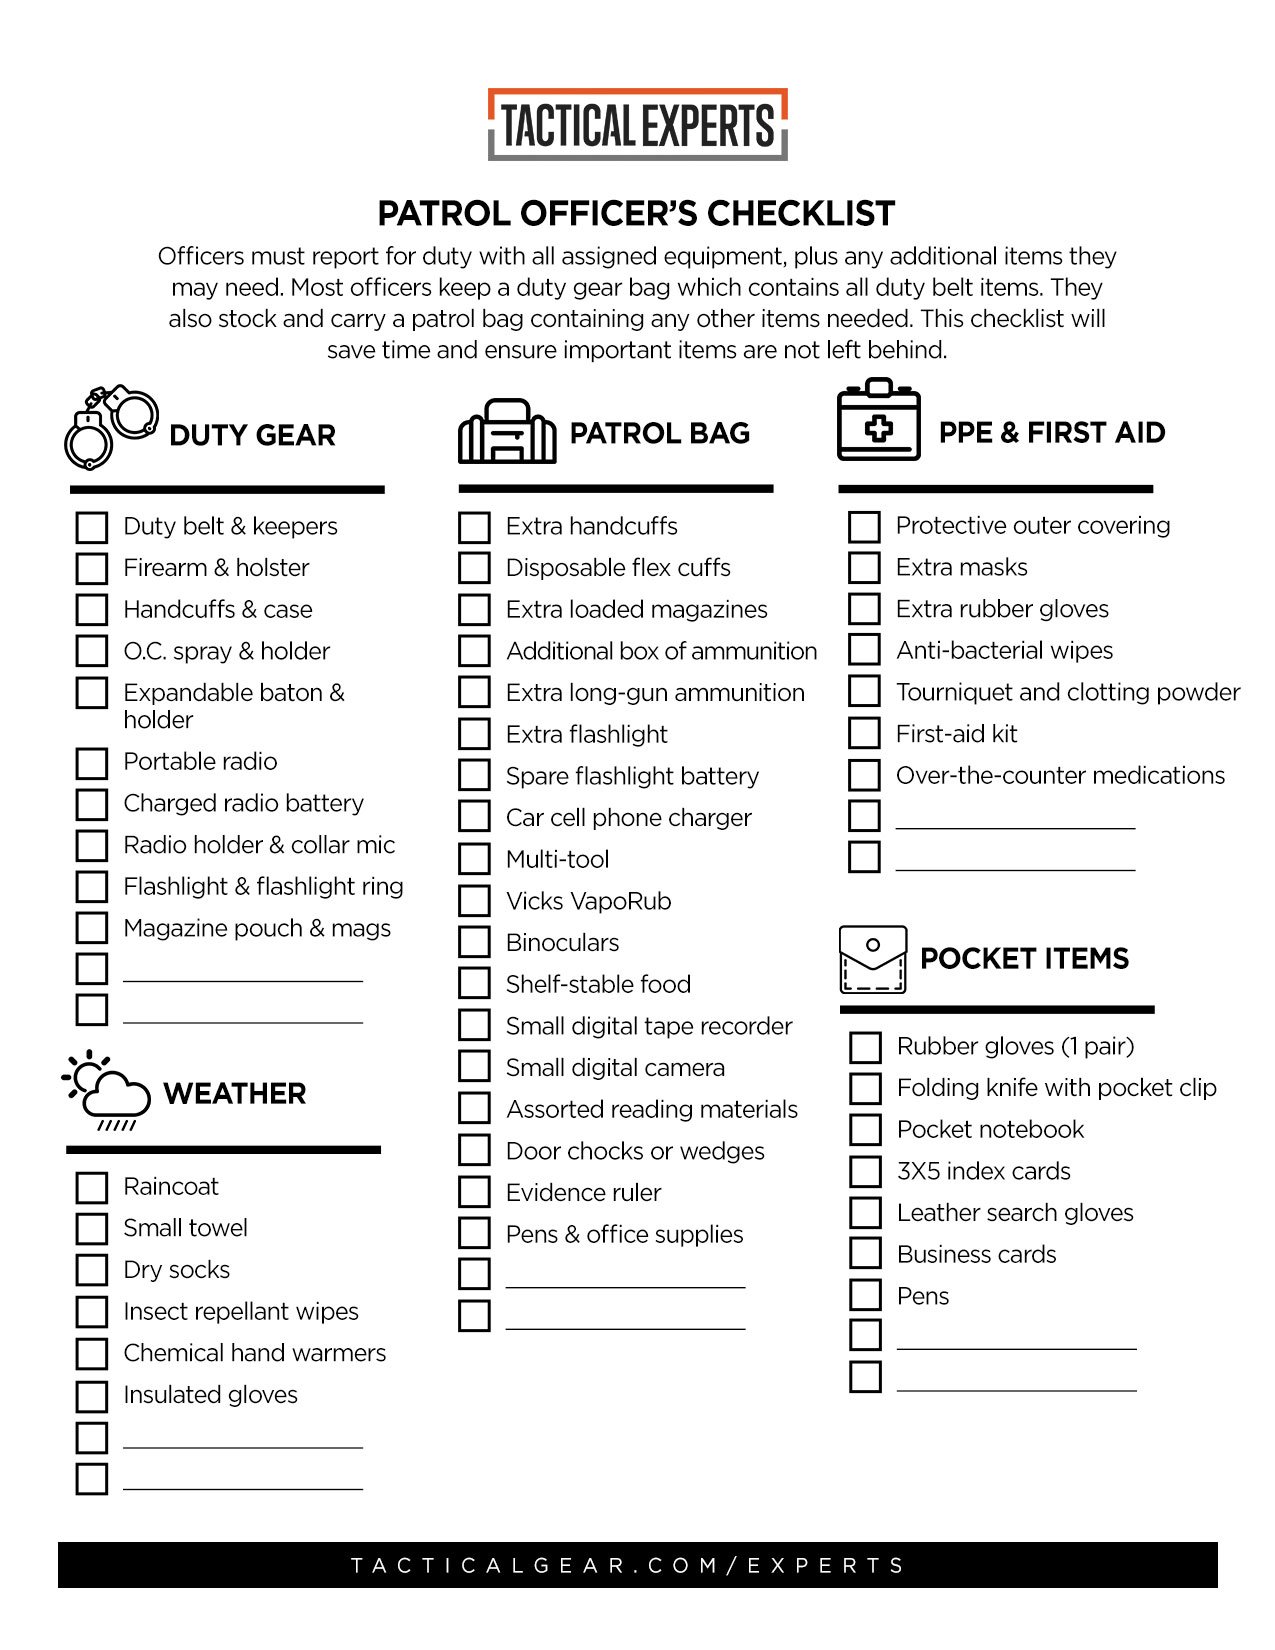 Patrol Officer’s Checklist | Tactical Experts | TacticalGear.com